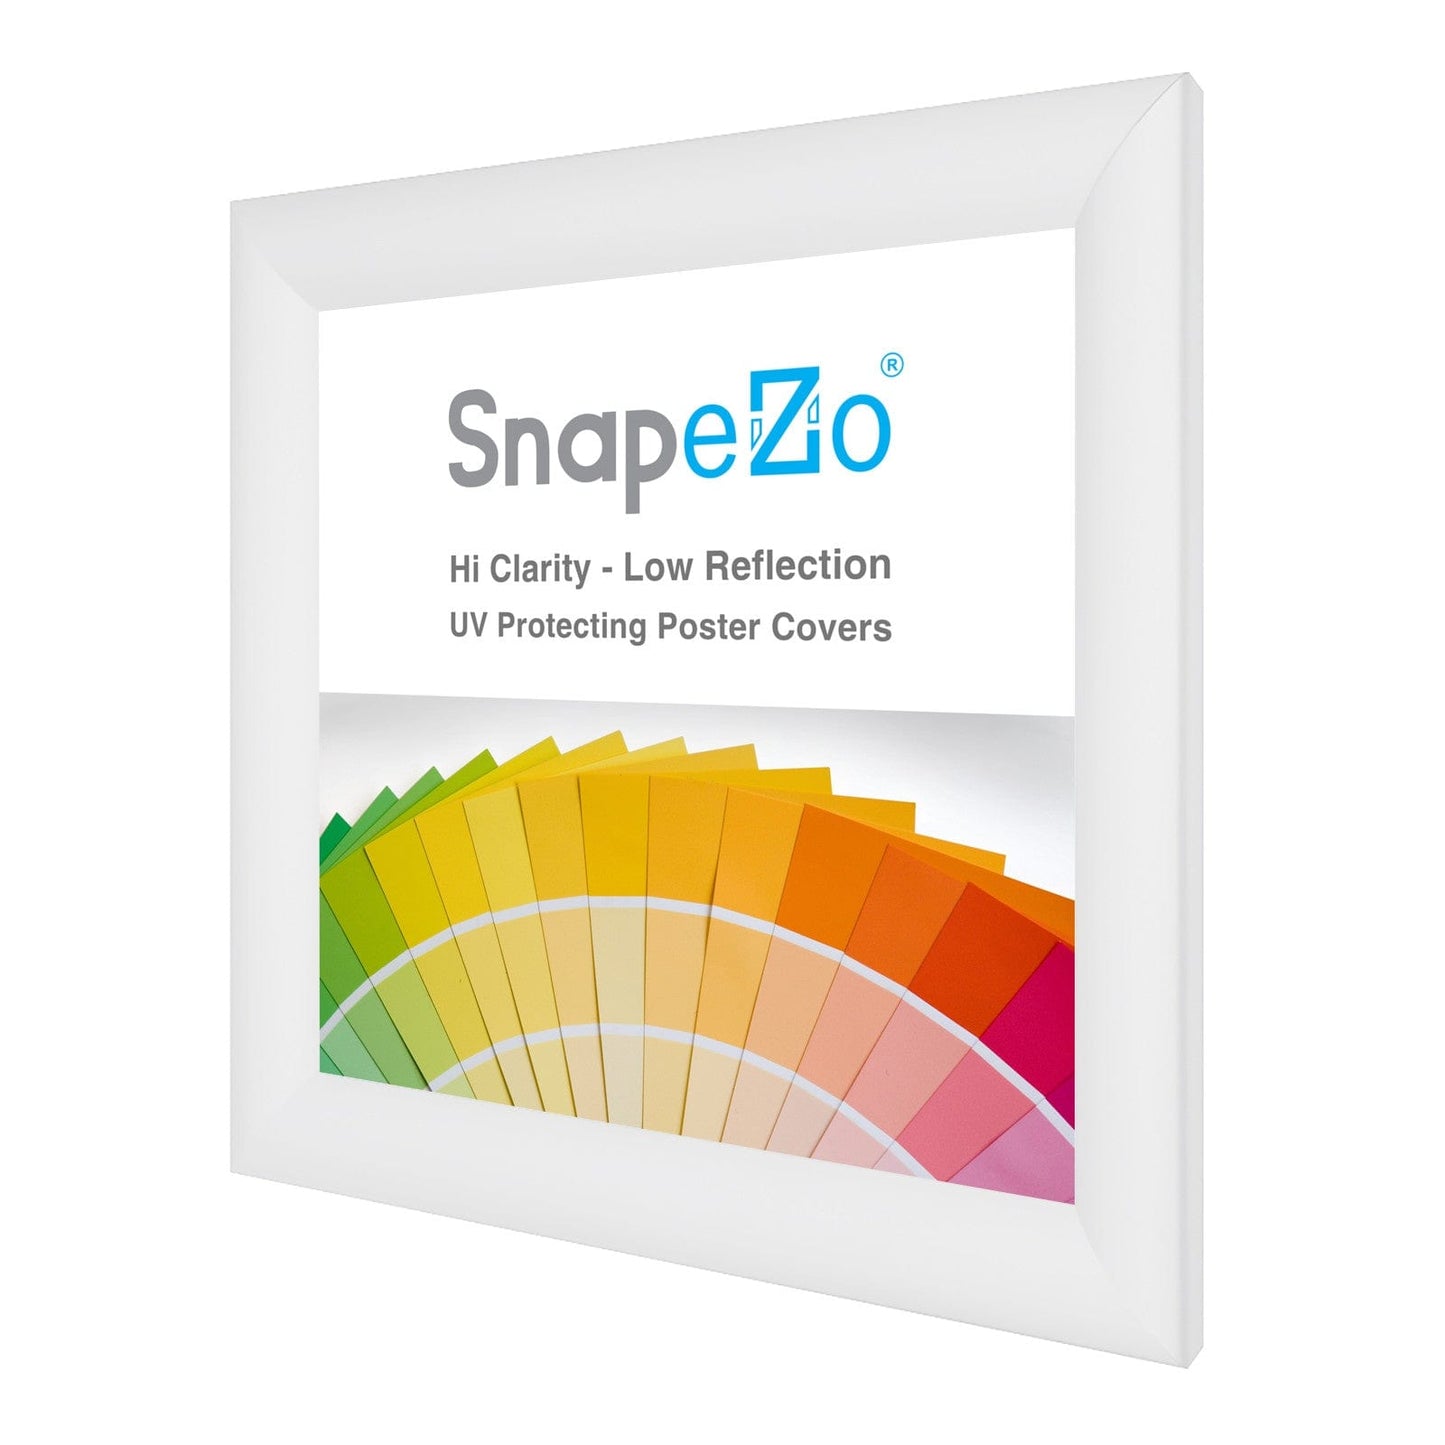 10x10 White SnapeZo® Snap Frame - 1.2" Profile - Snap Frames Direct